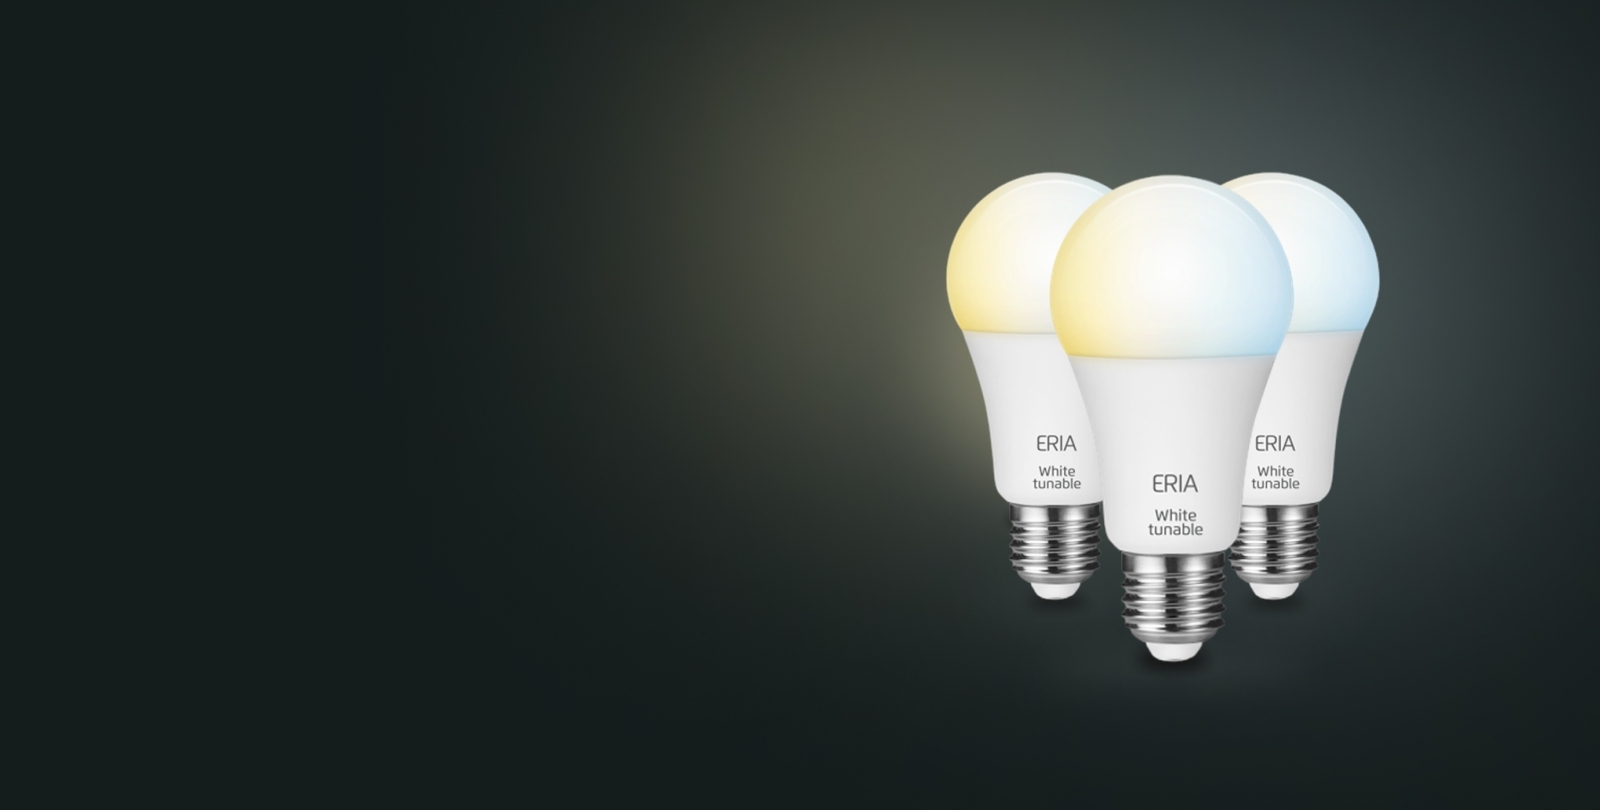 Product image of Vivint Smart Light Bulbs.